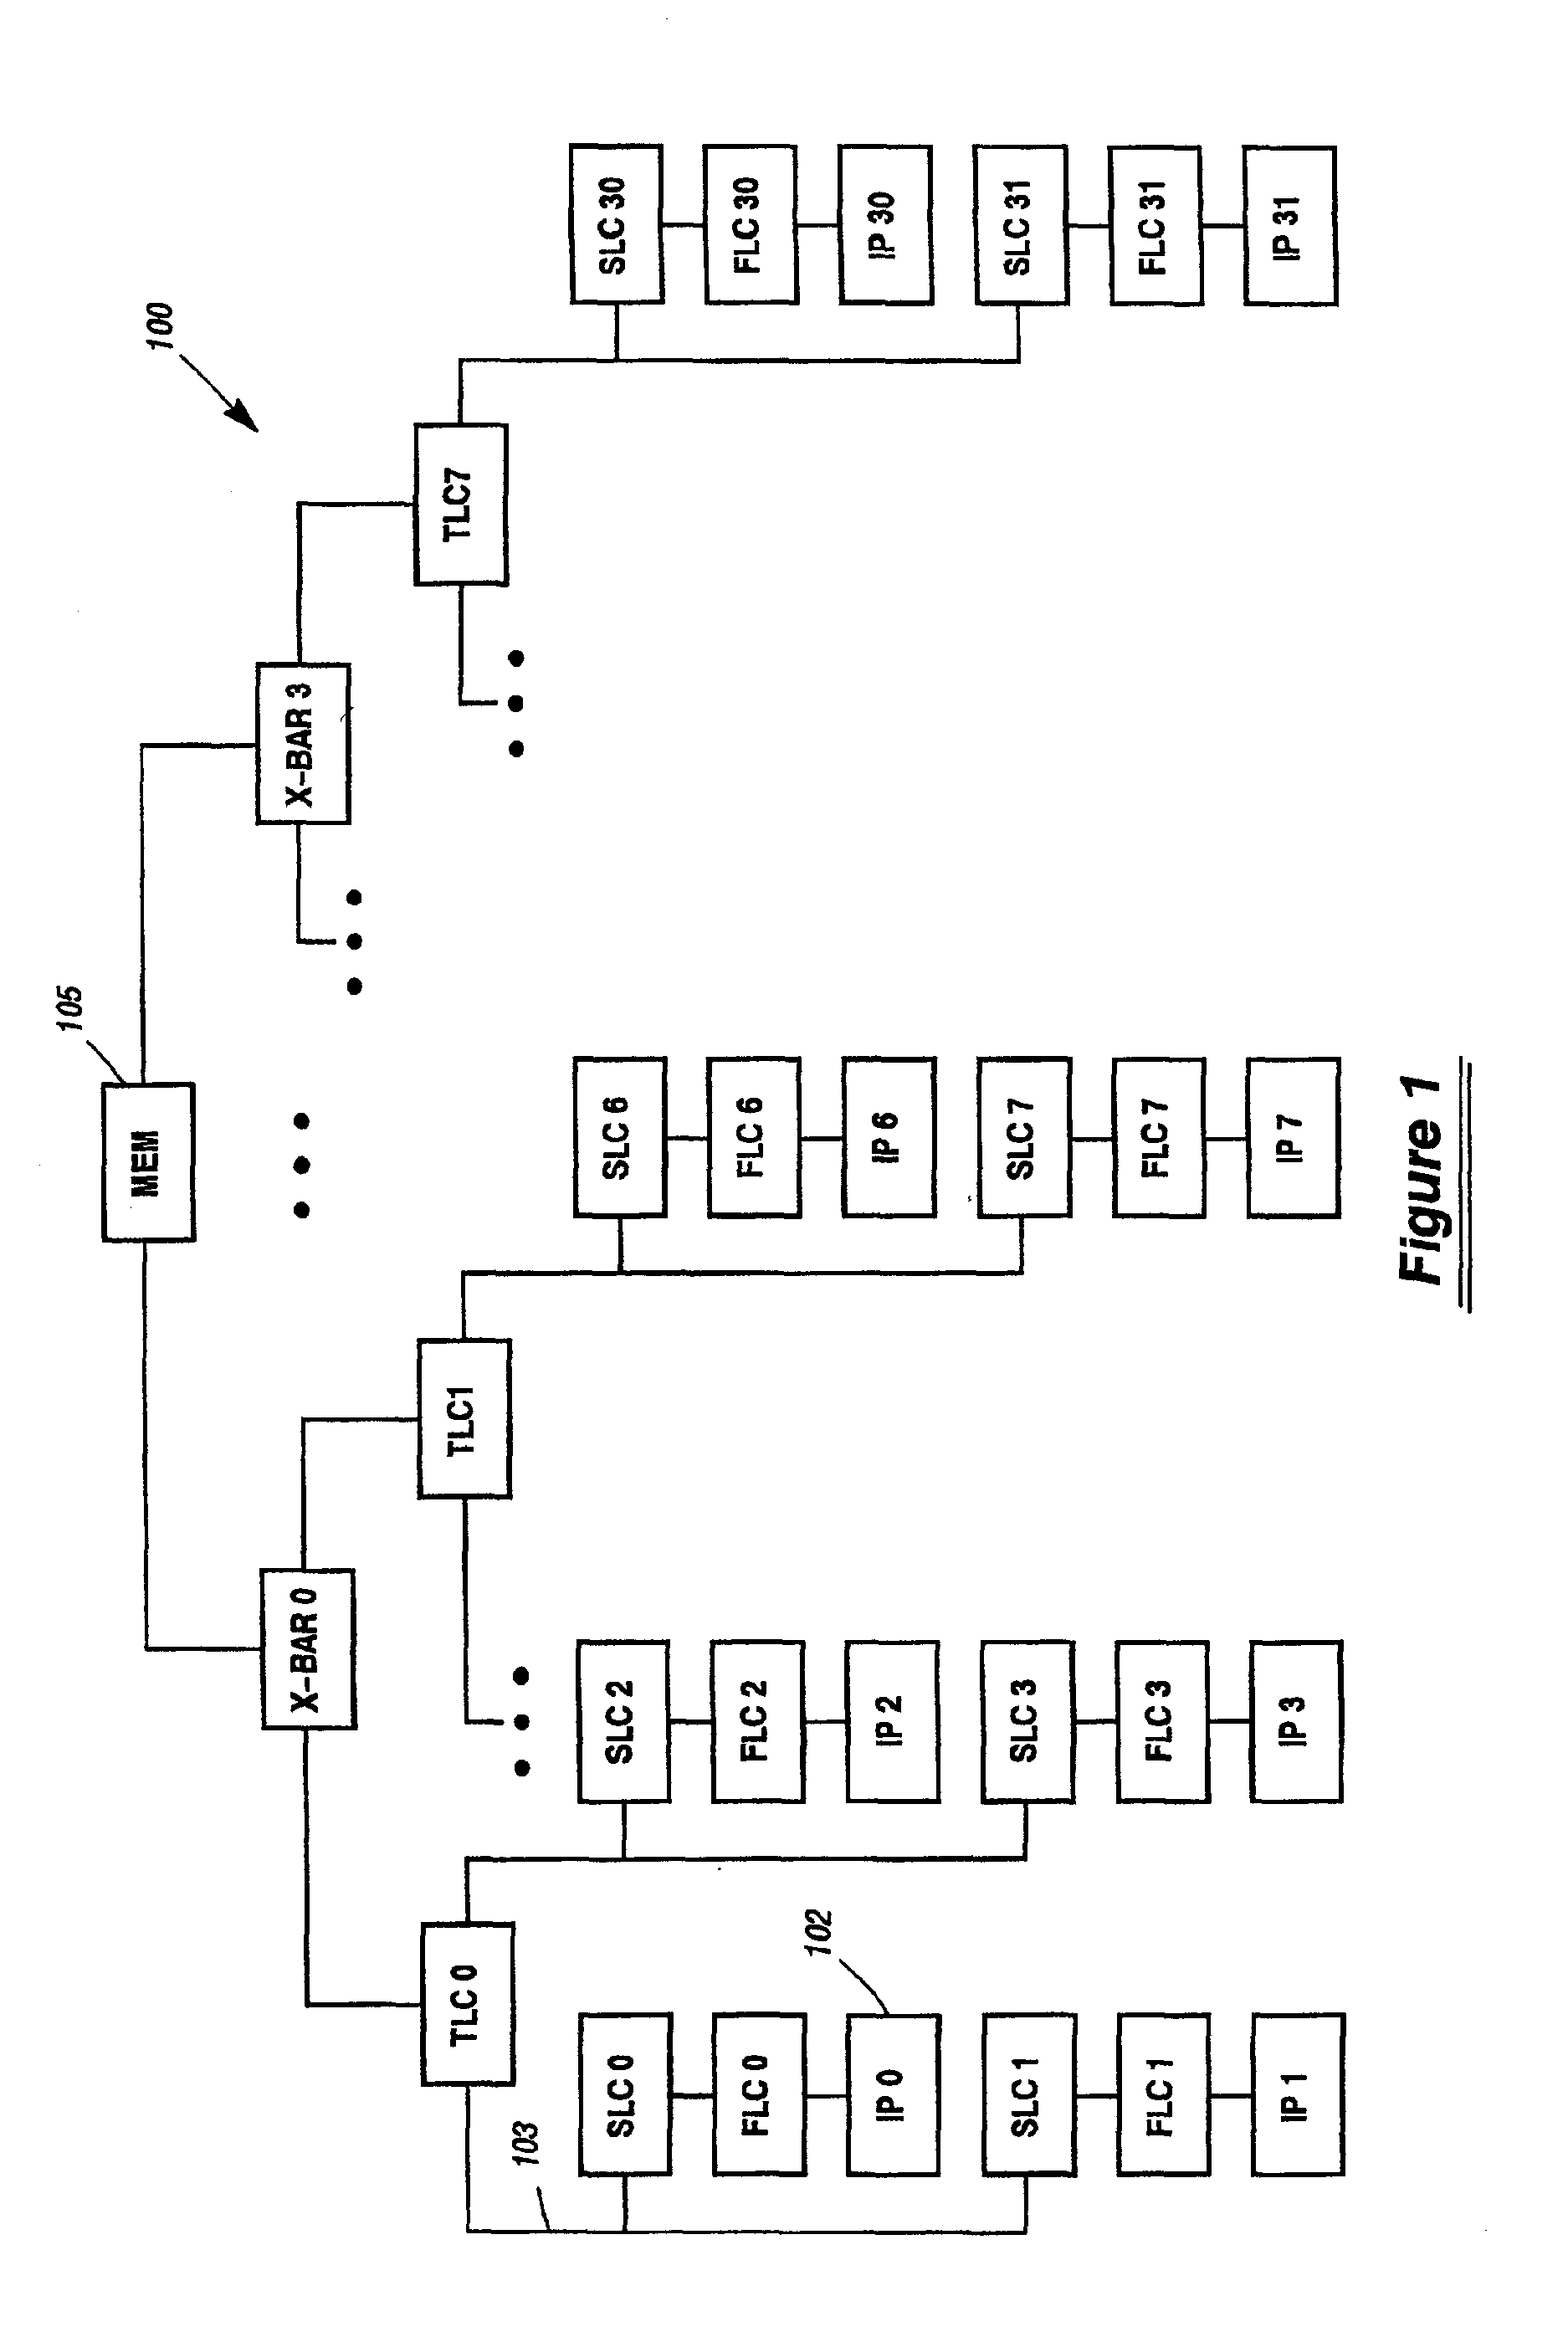 Method for processing communal locks